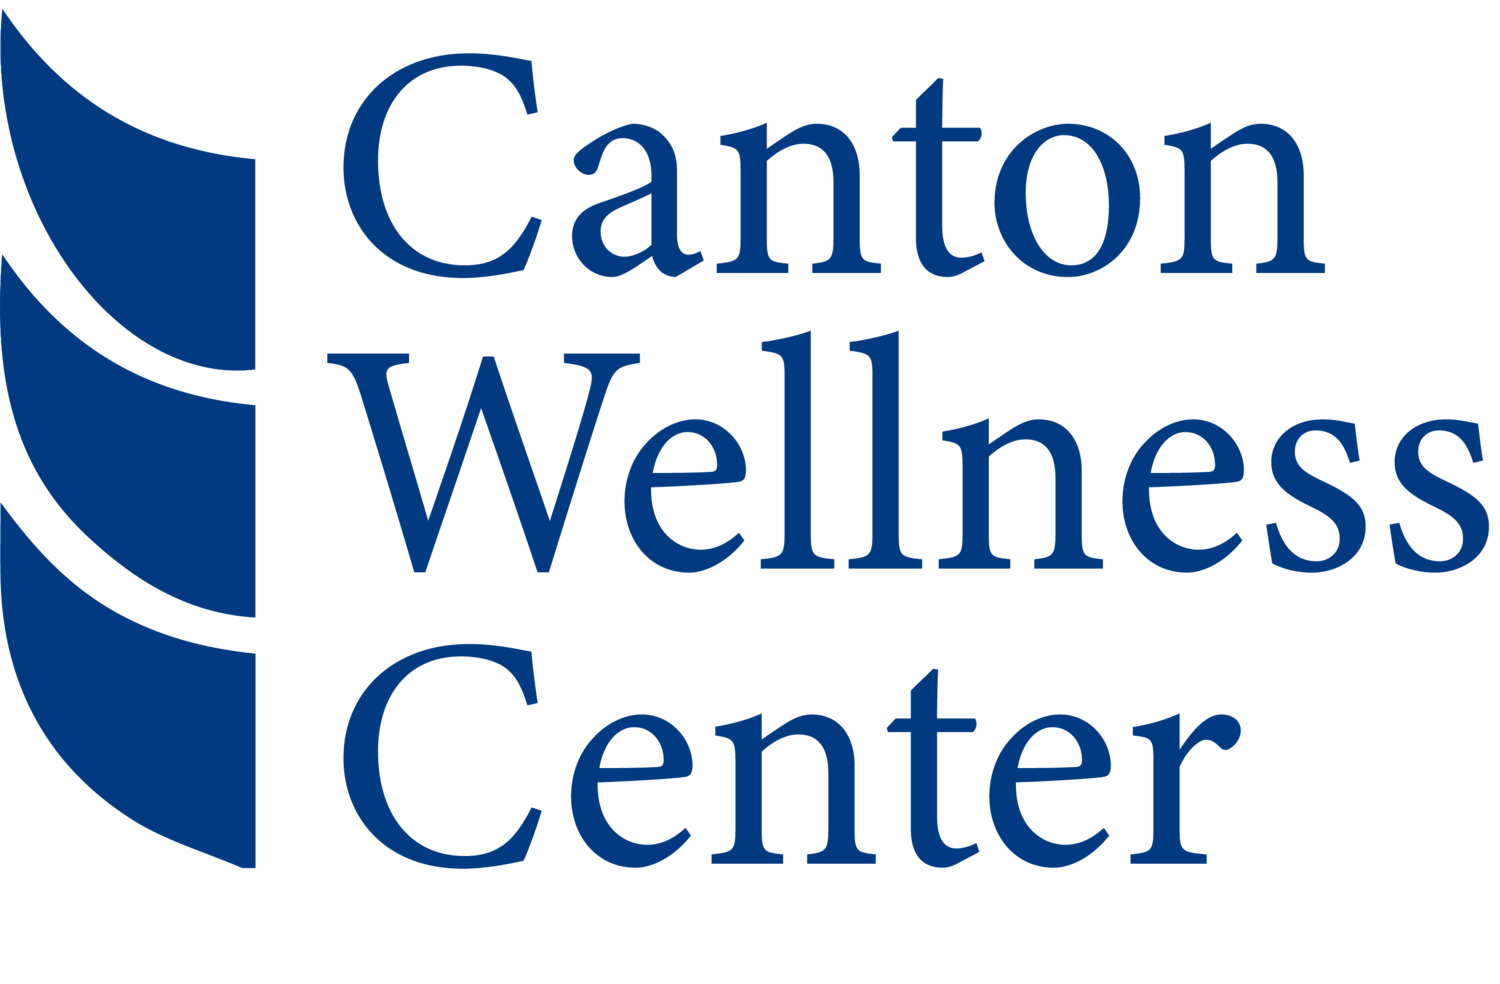 Canton Wellness Center